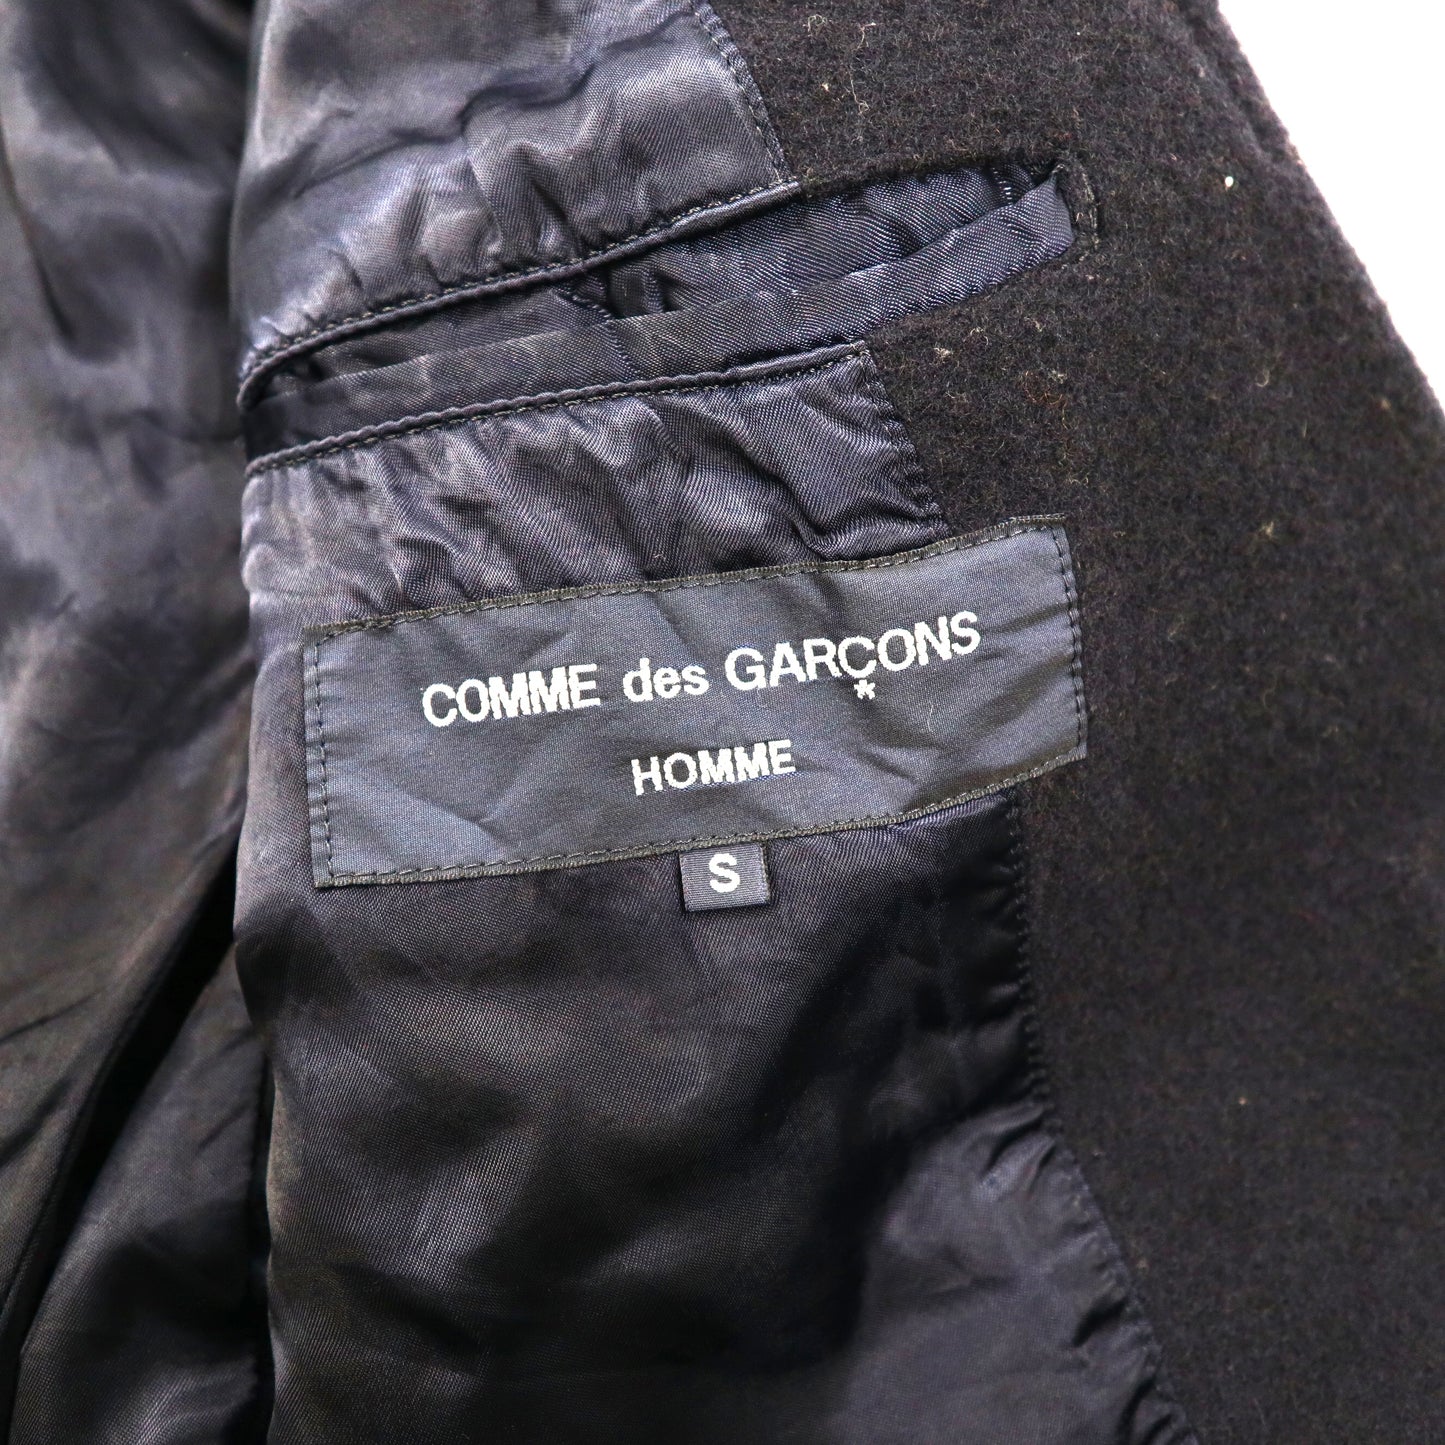 COMME des GARCONS HOMME 2Bテーラードジャケット S ネイビー ウール HL-J023 日本製